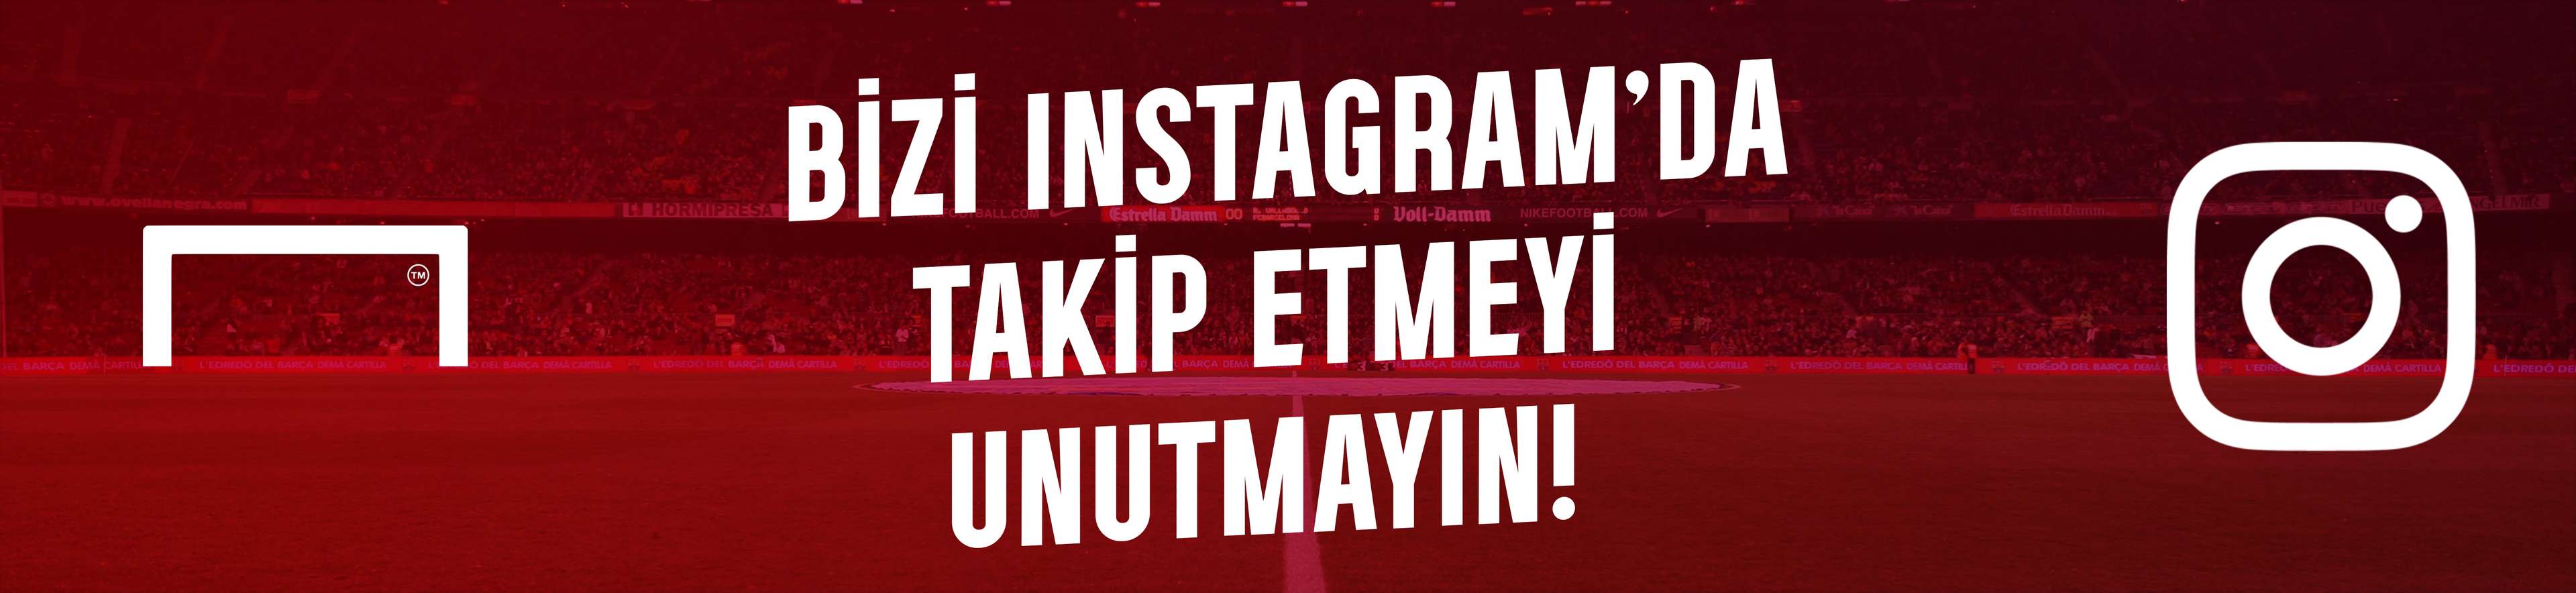 instagram banner goal turkey